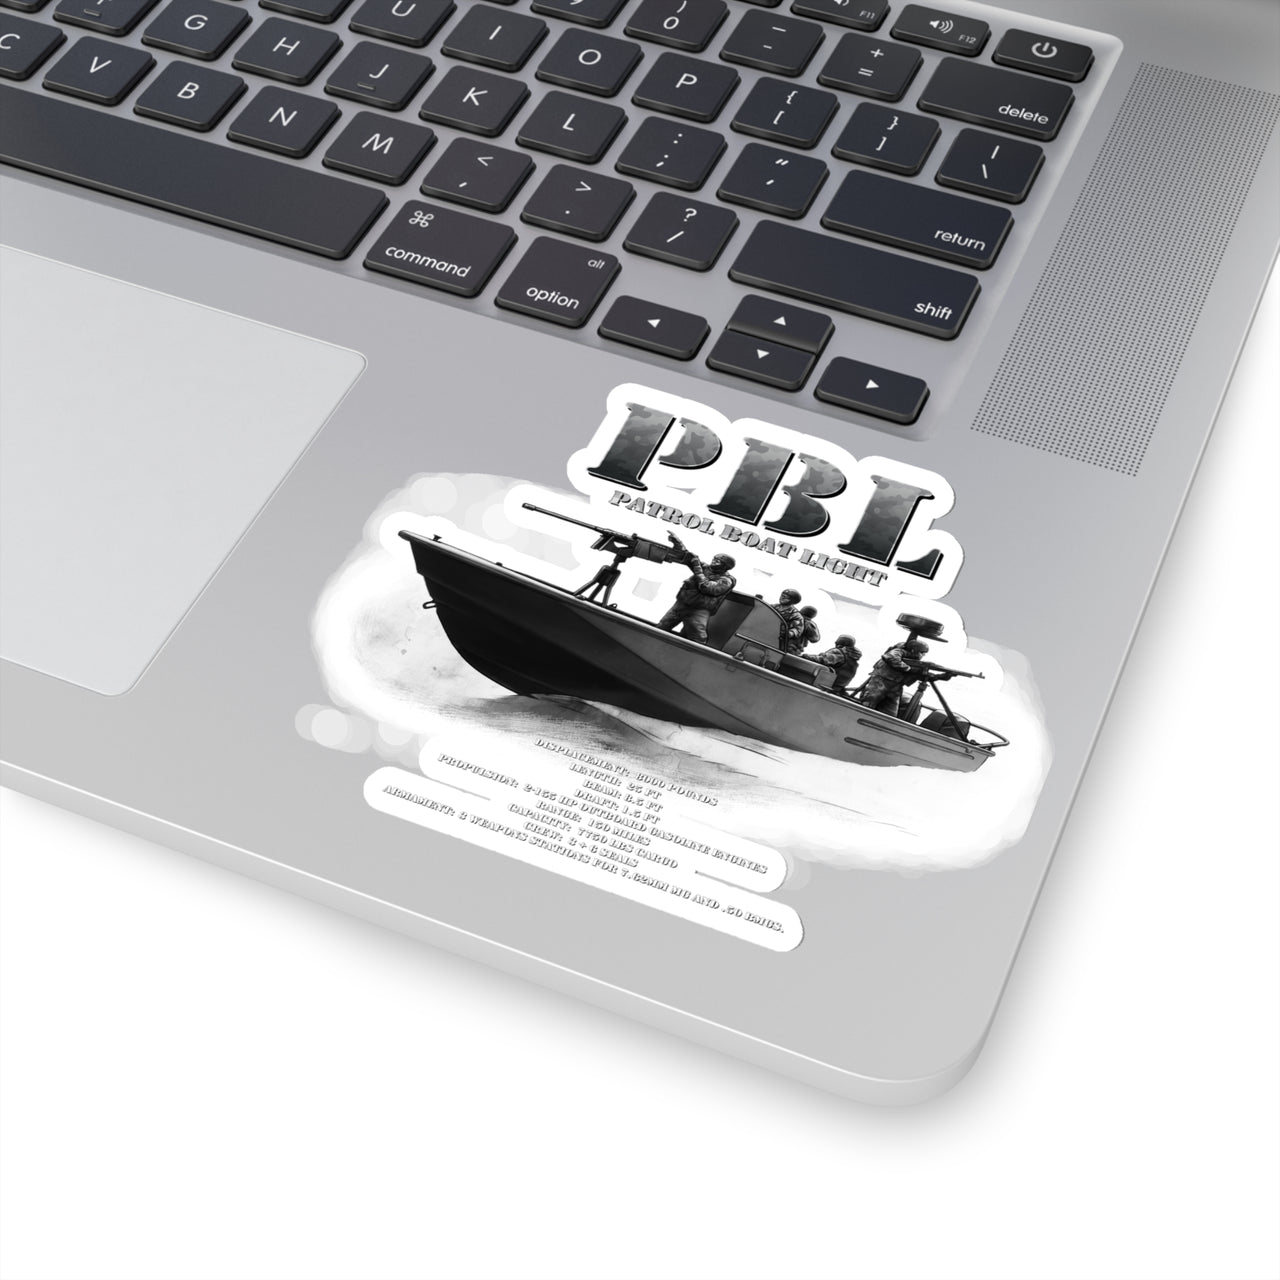 PBL v2 - Patrol Boat Light Sticker